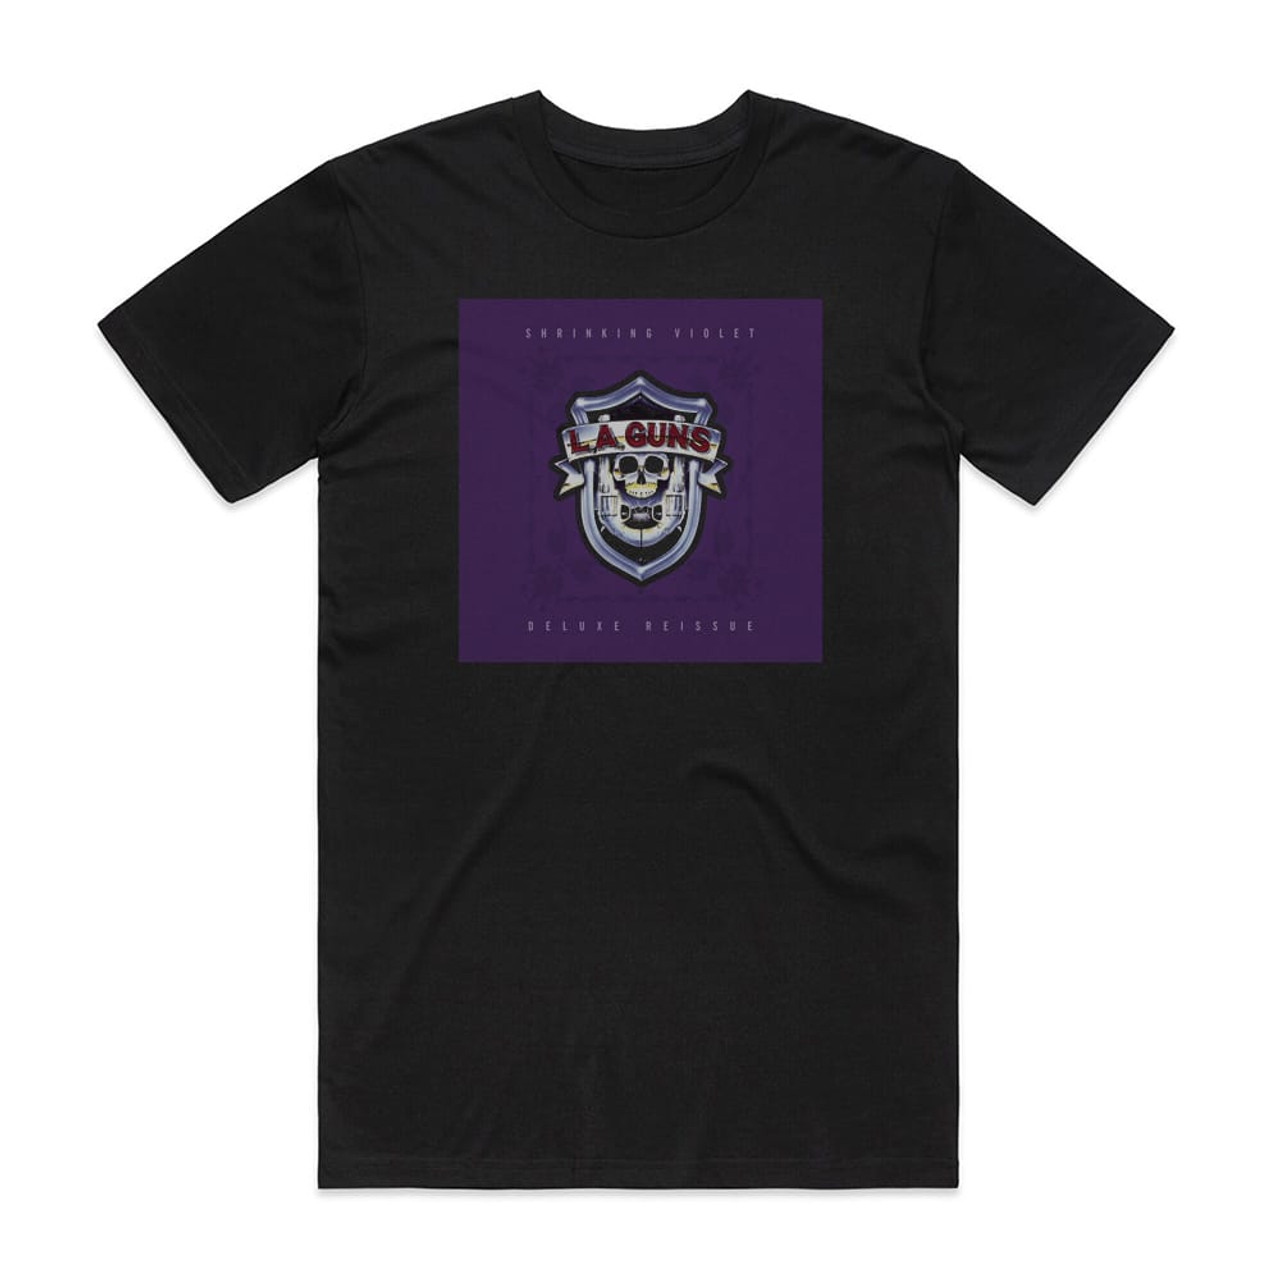 LA Guns Shrinking Violet 1 Album Cover T-Shirt Black